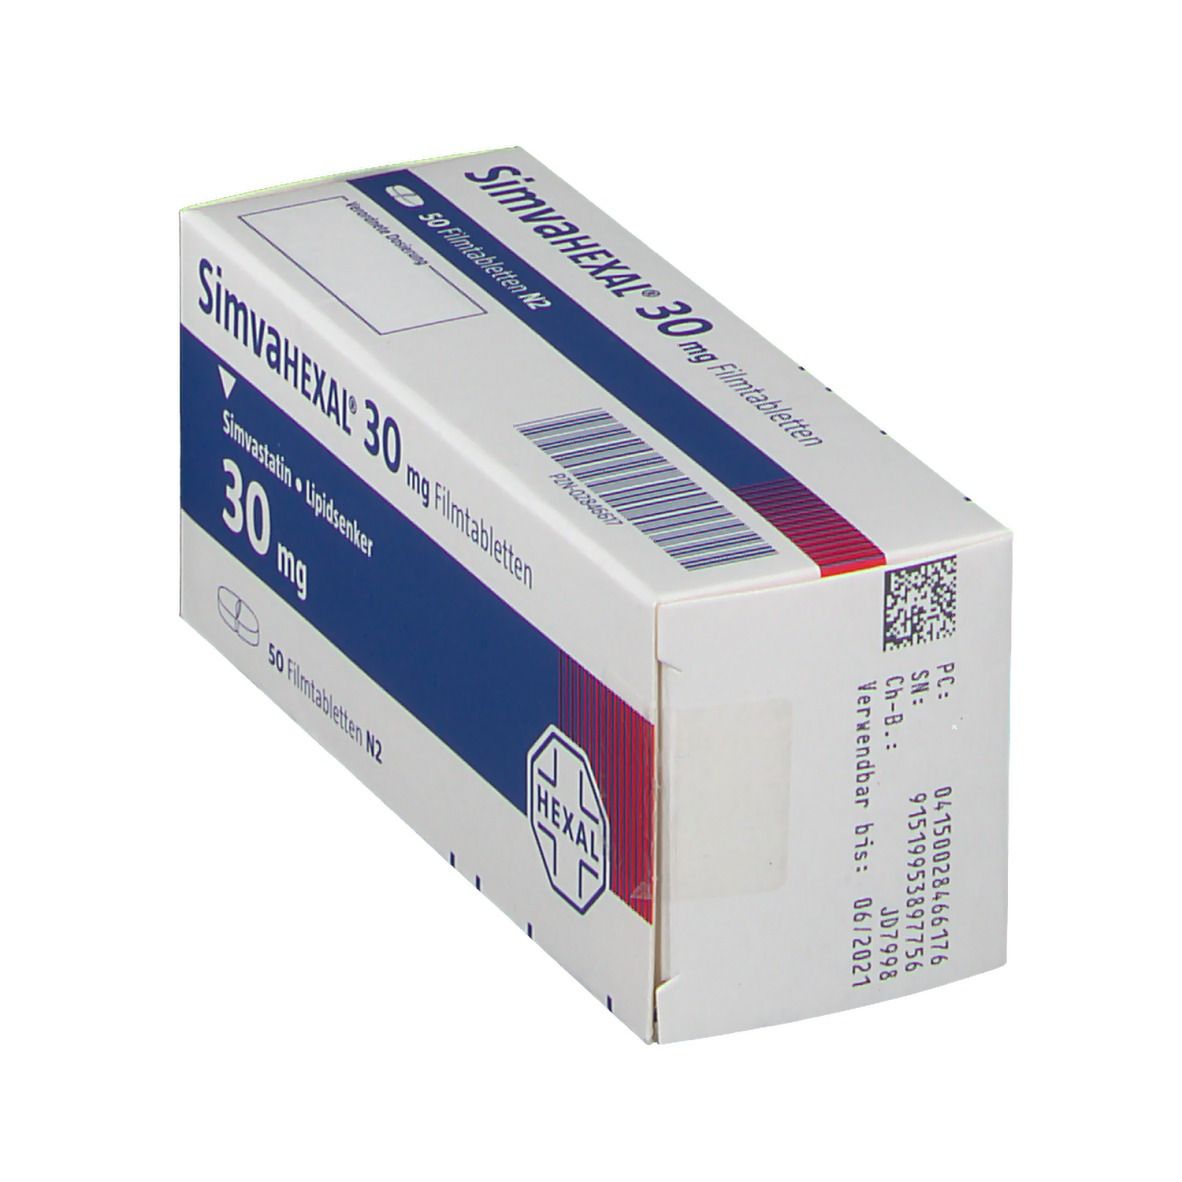 SimvaHEXAL® 30 mg